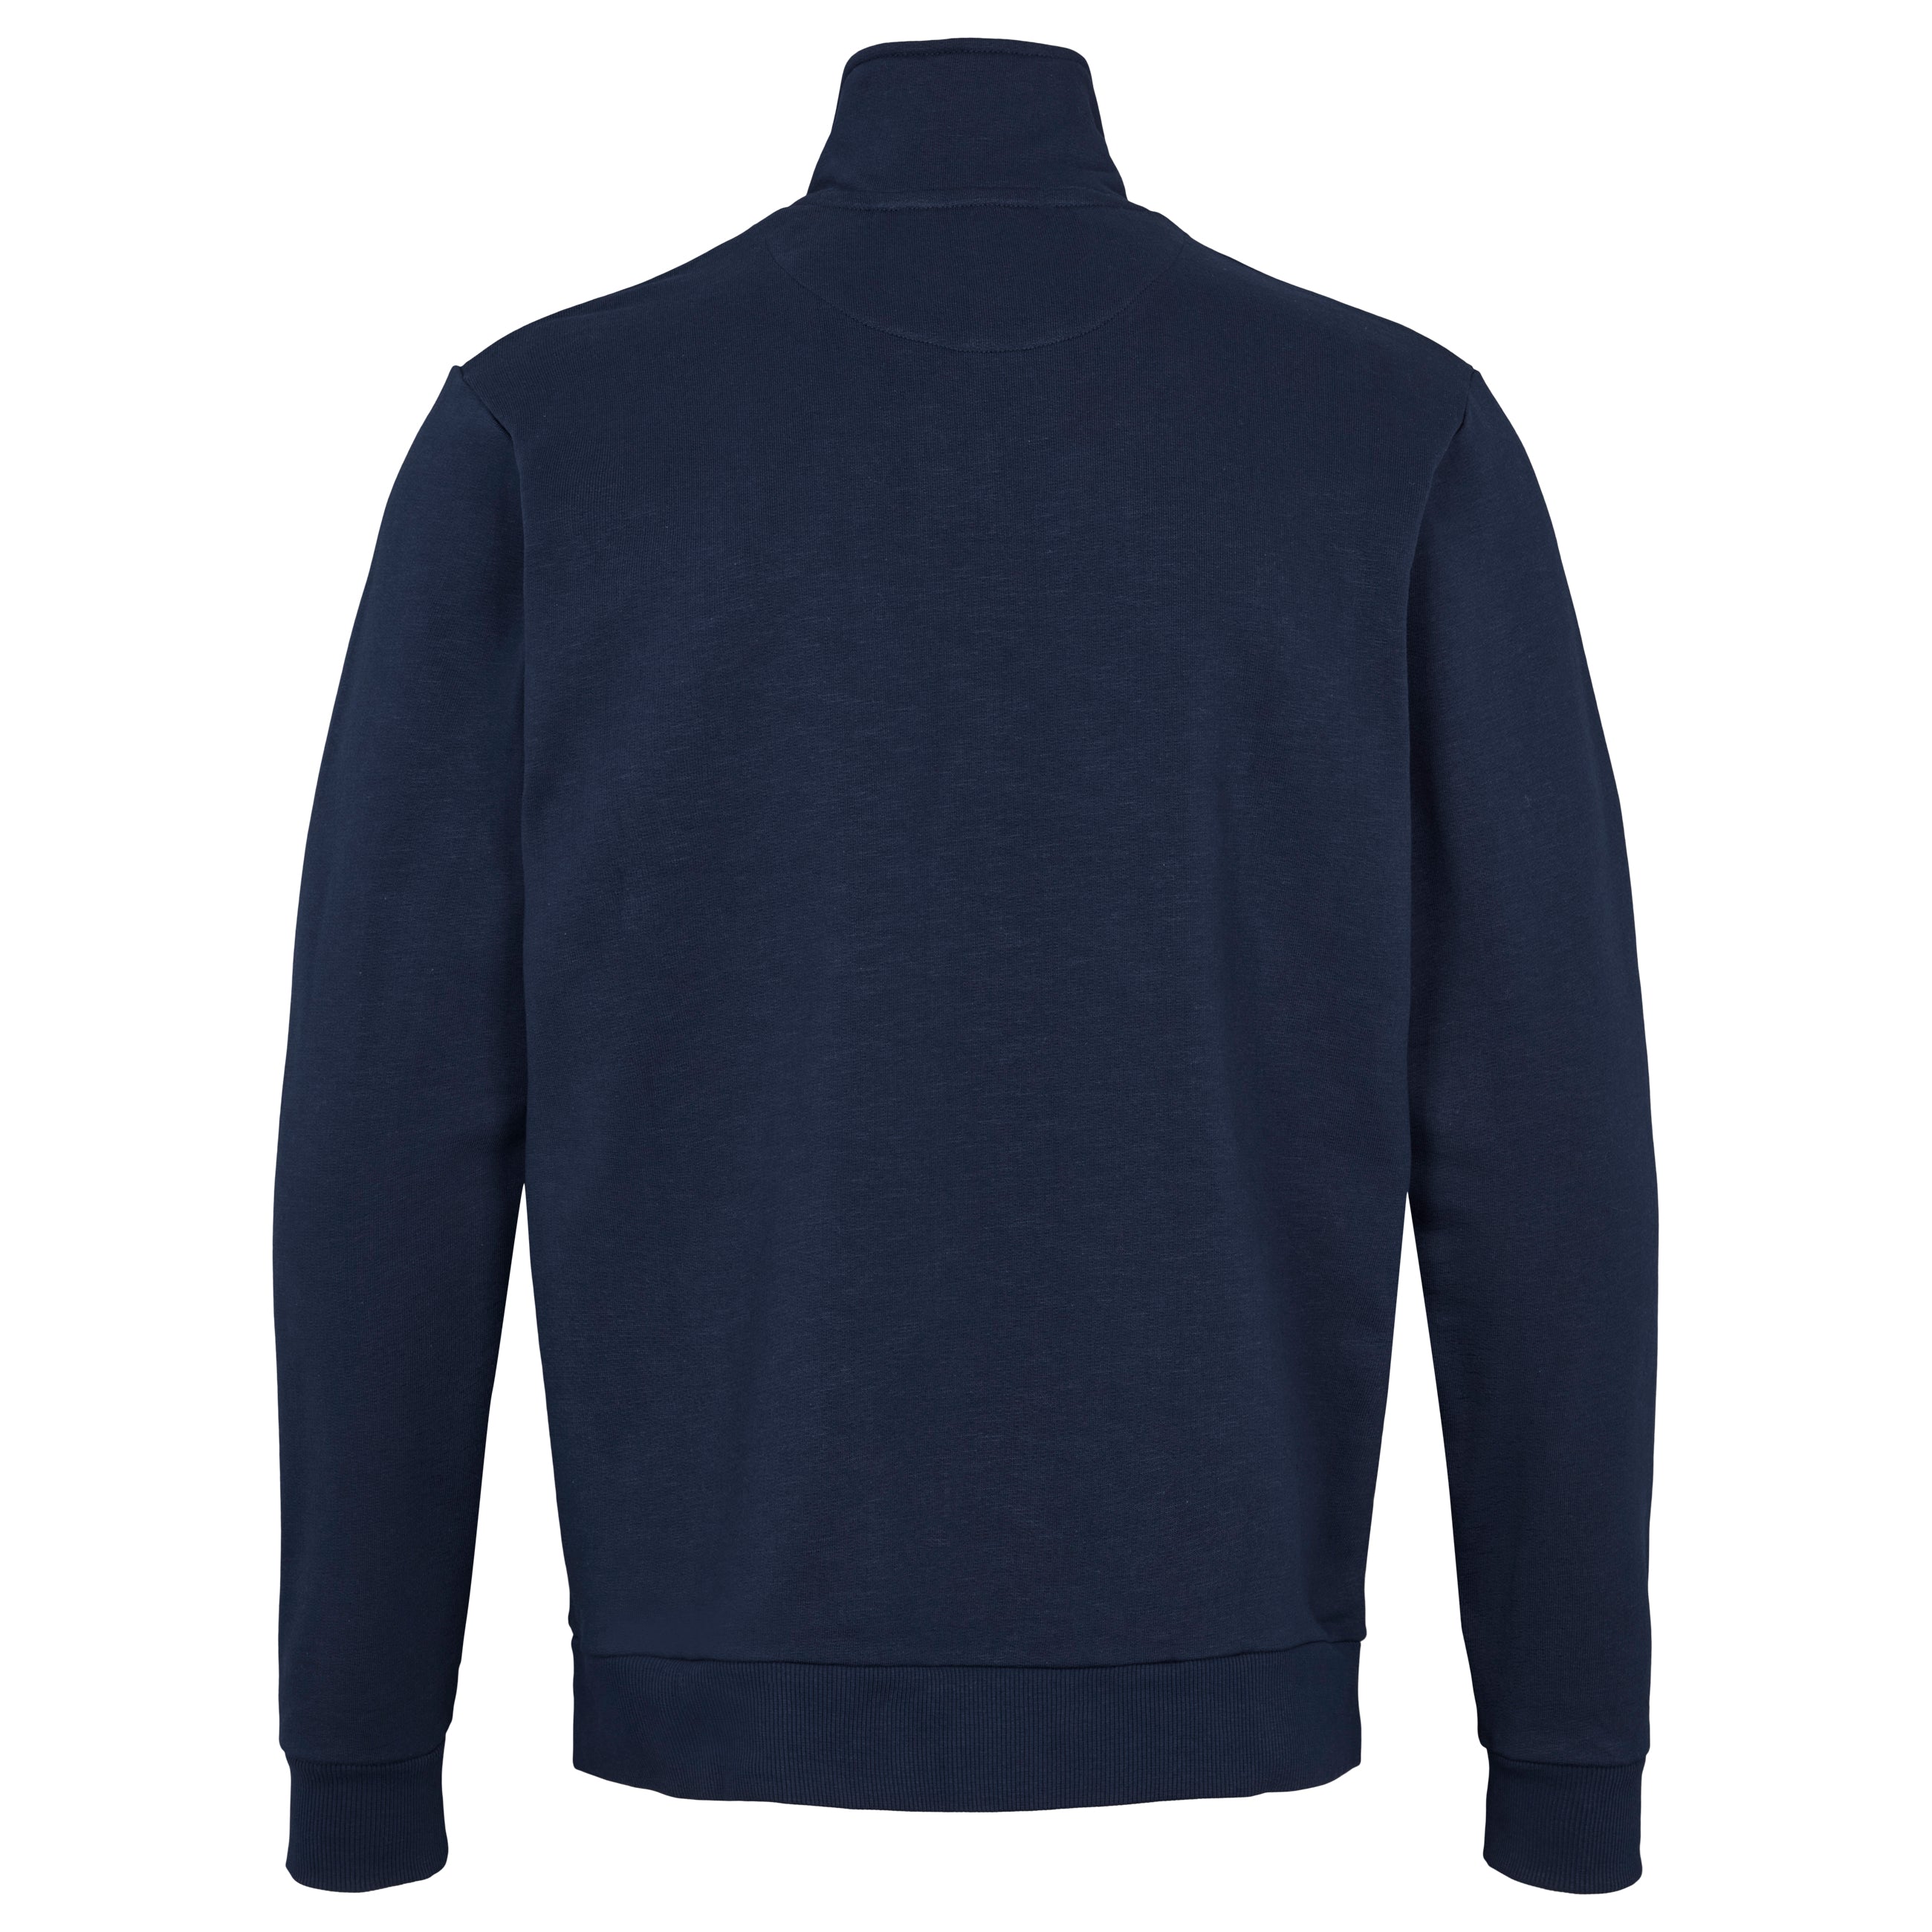 By Garment Makers Marlon GOTS Sweatshirt 3096 Navy Blazer